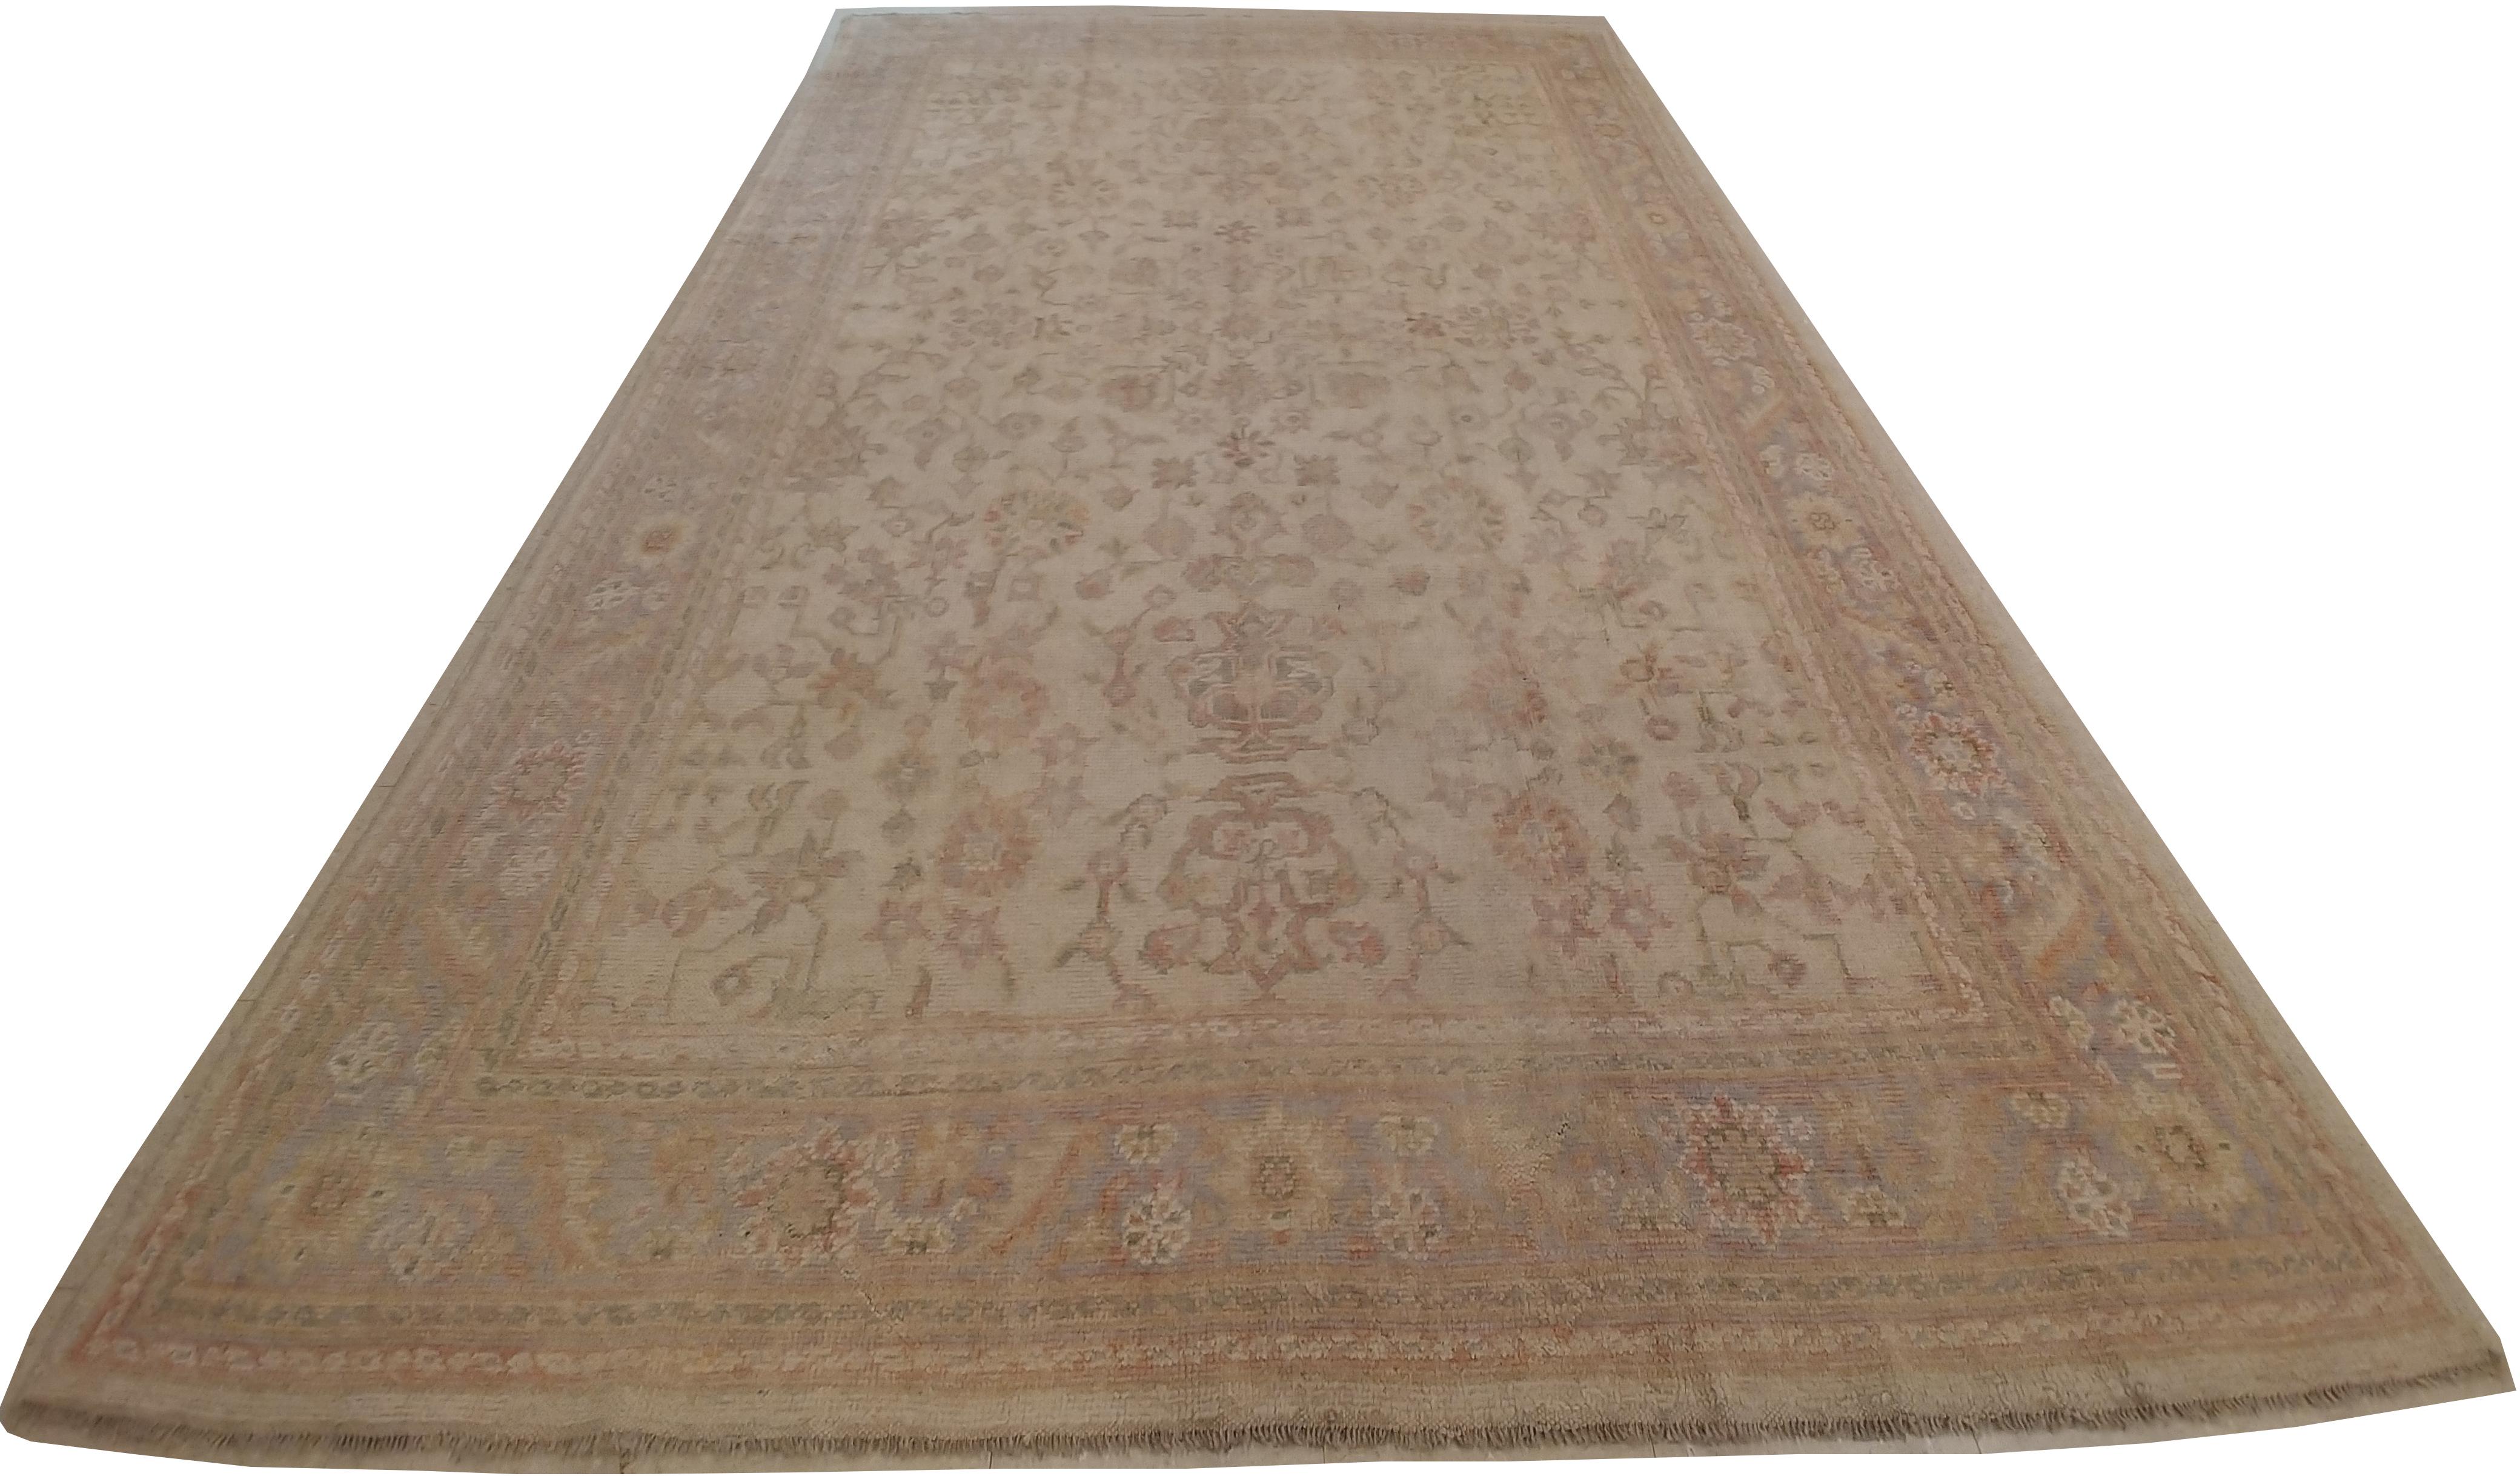 Antique Oushak Carpet, Handmade Turkish Oriental Rug, Beige, Taupe, Soft For Sale 7